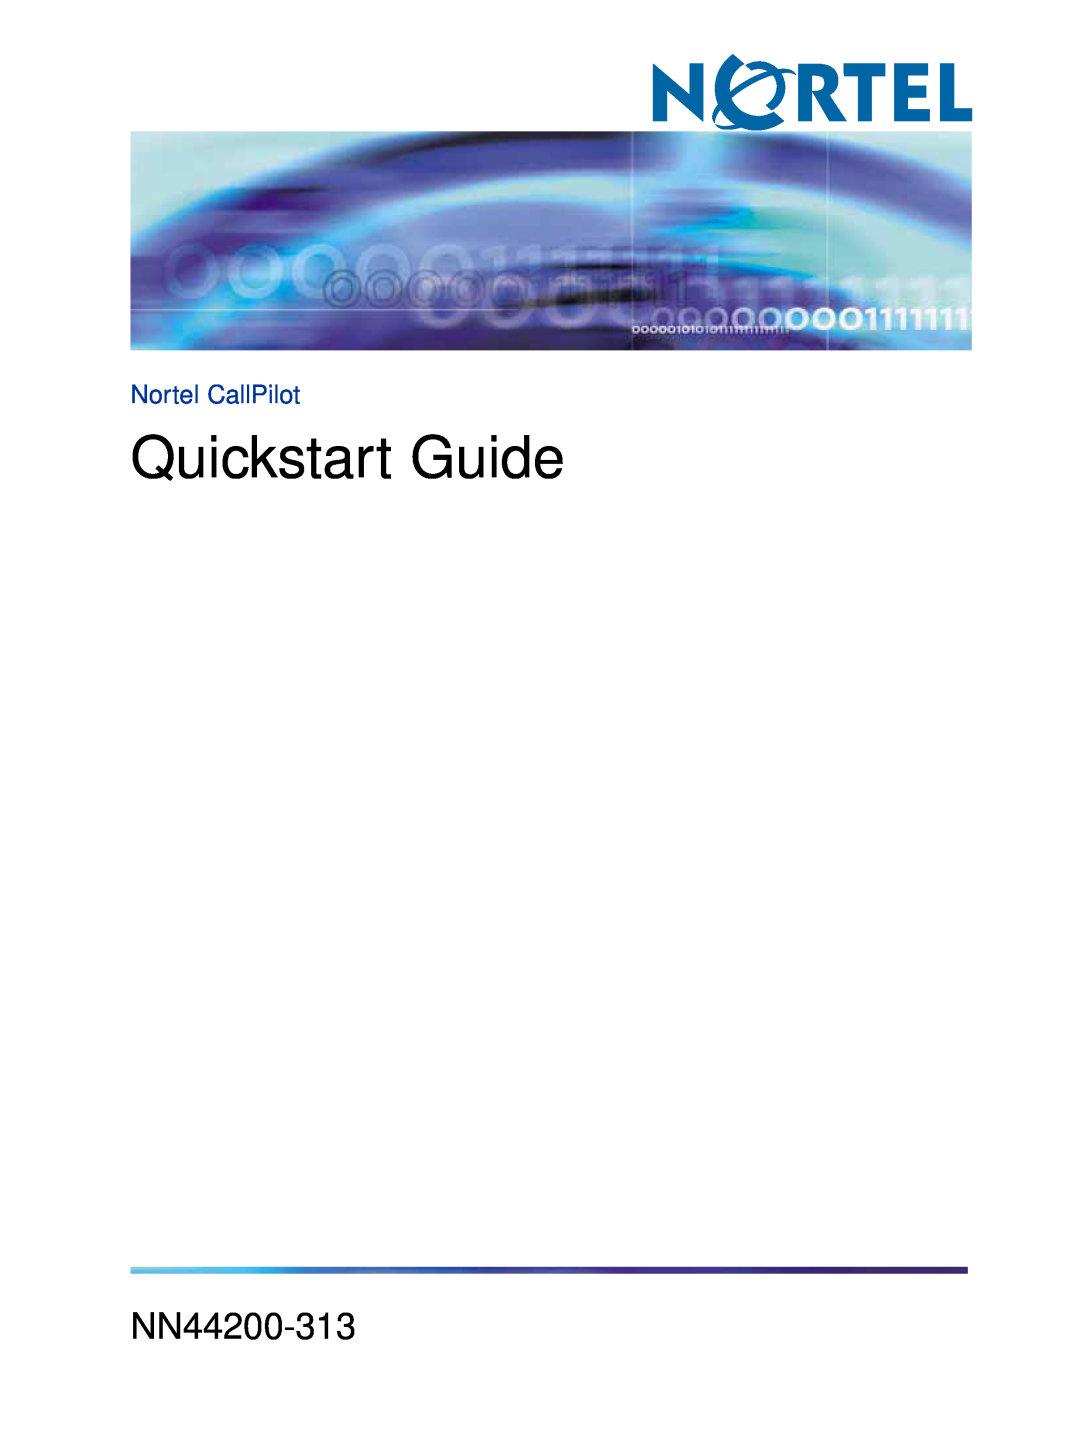 Nortel Networks NN44200-313 quick start Quickstart Guide, Nortel CallPilot 